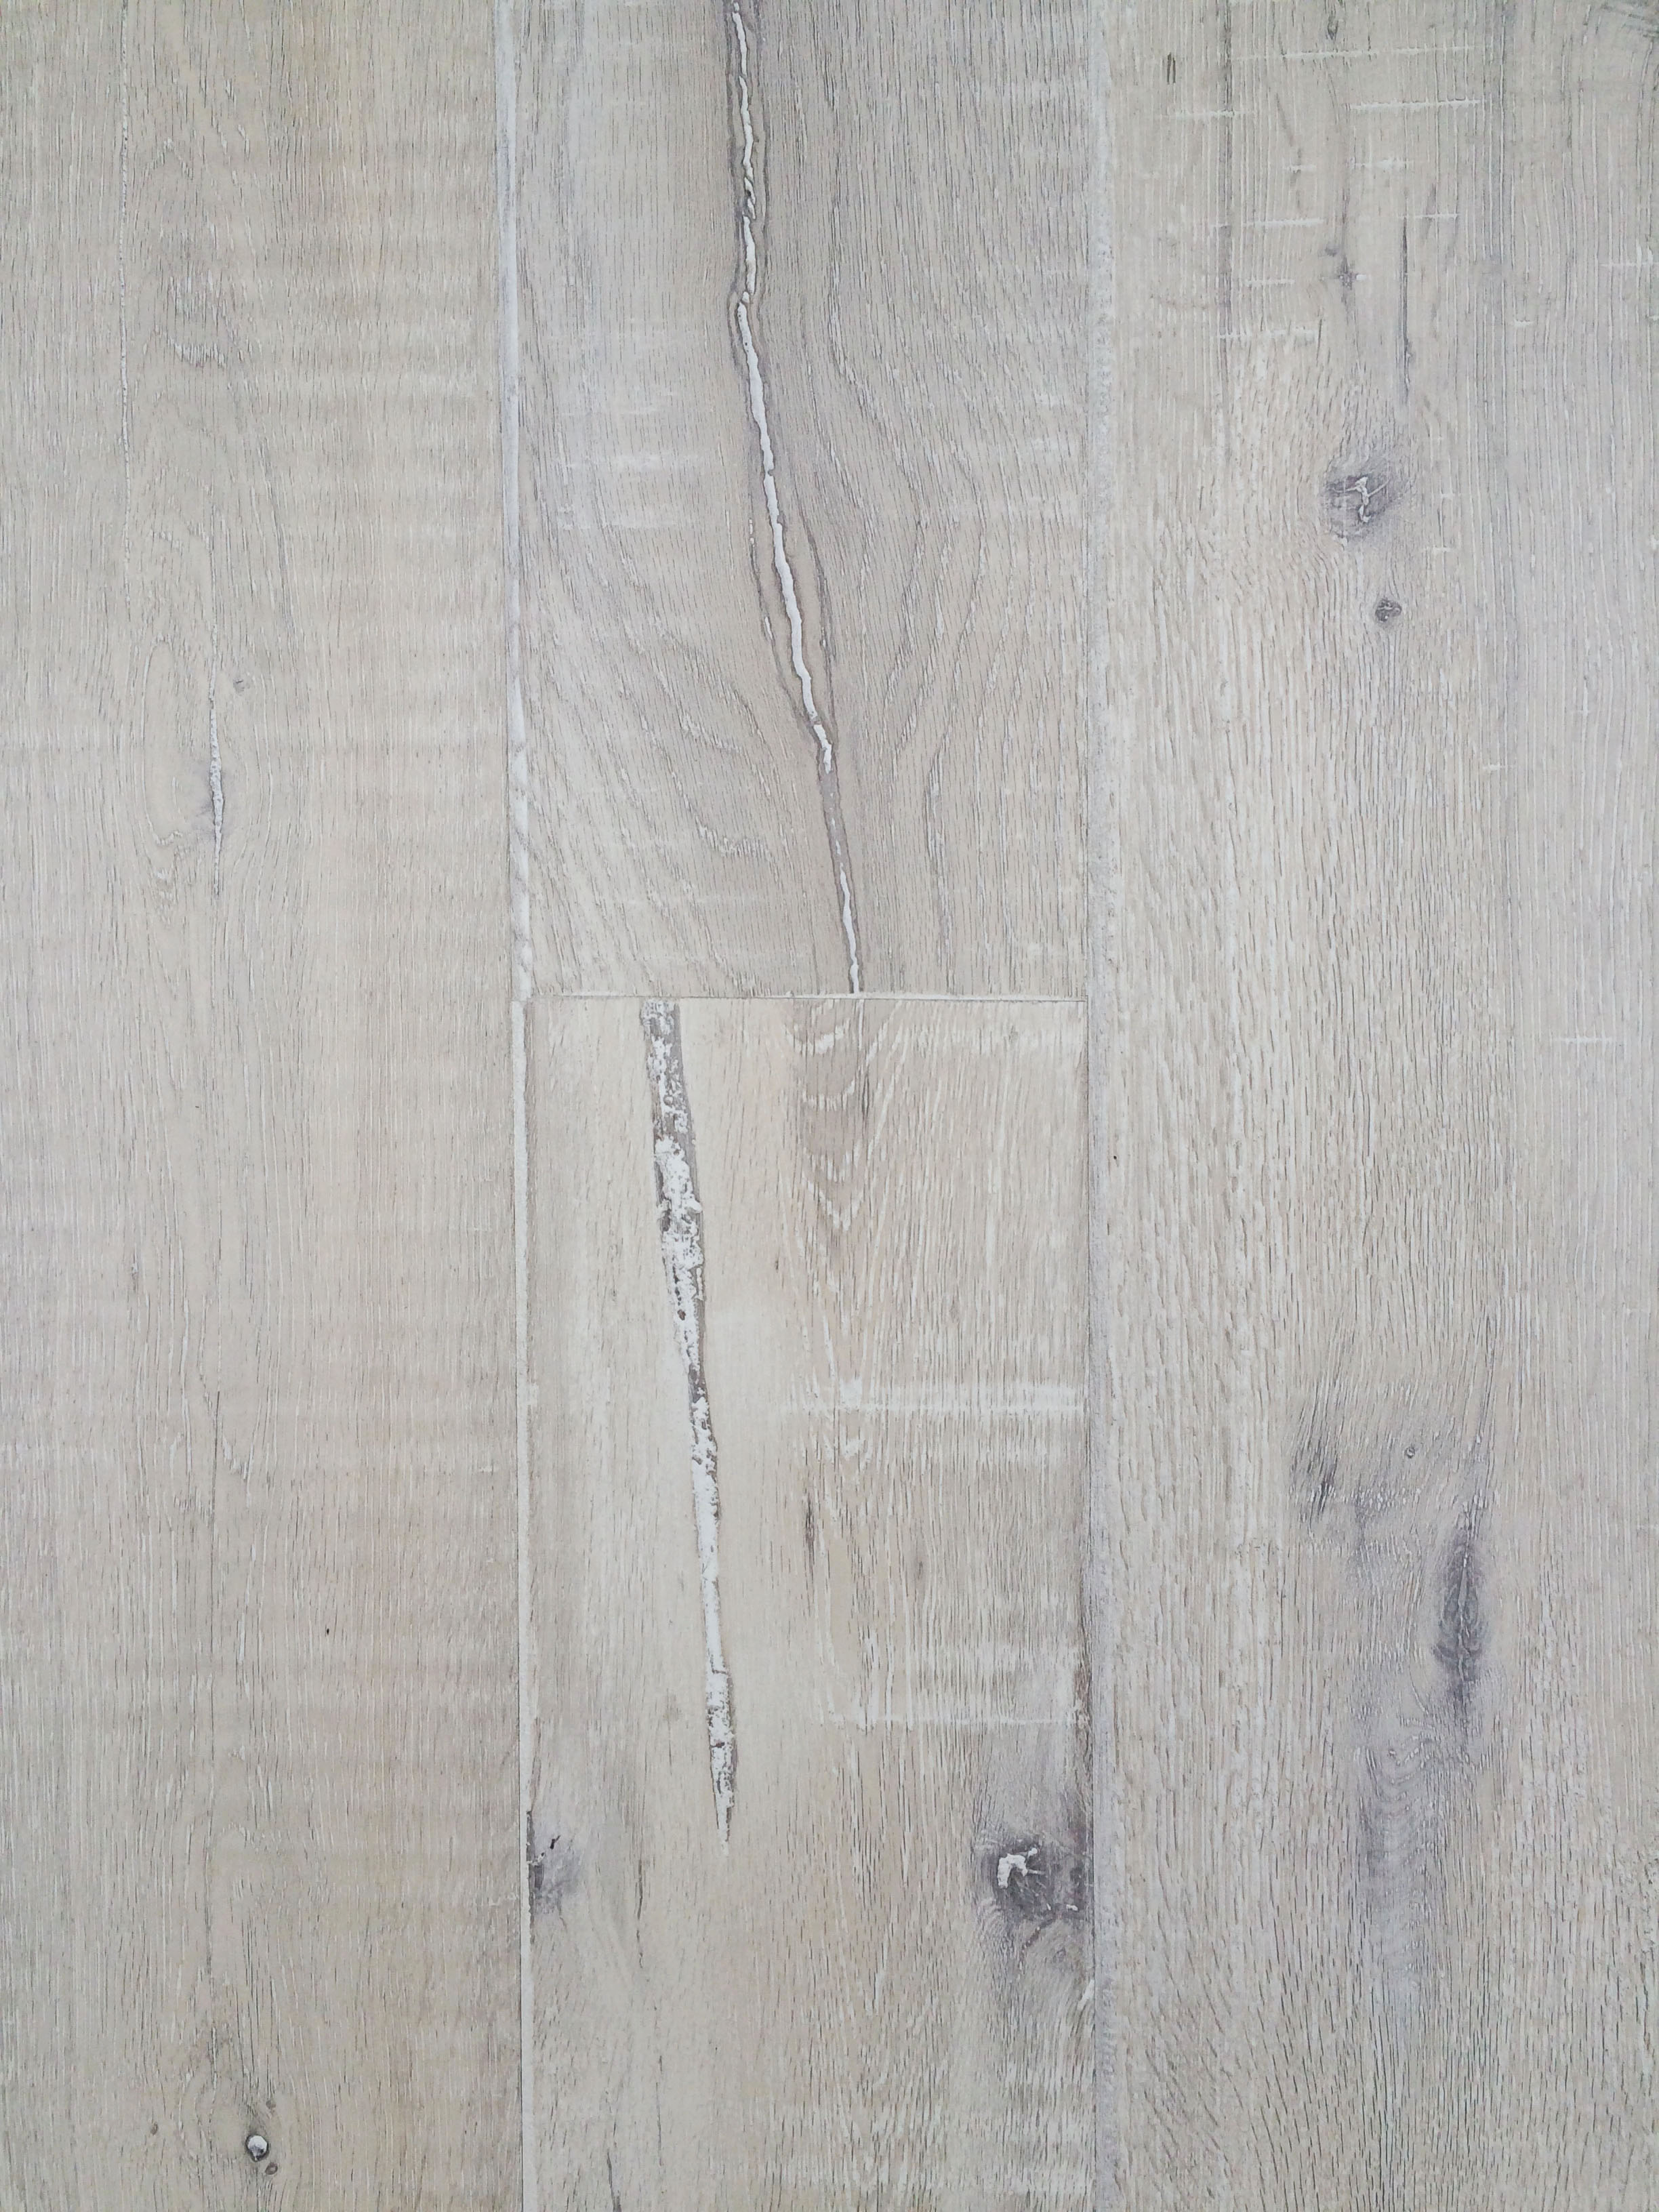 Rustic Barnwood White Tg1216s, White Distressed Wood Laminate Flooring